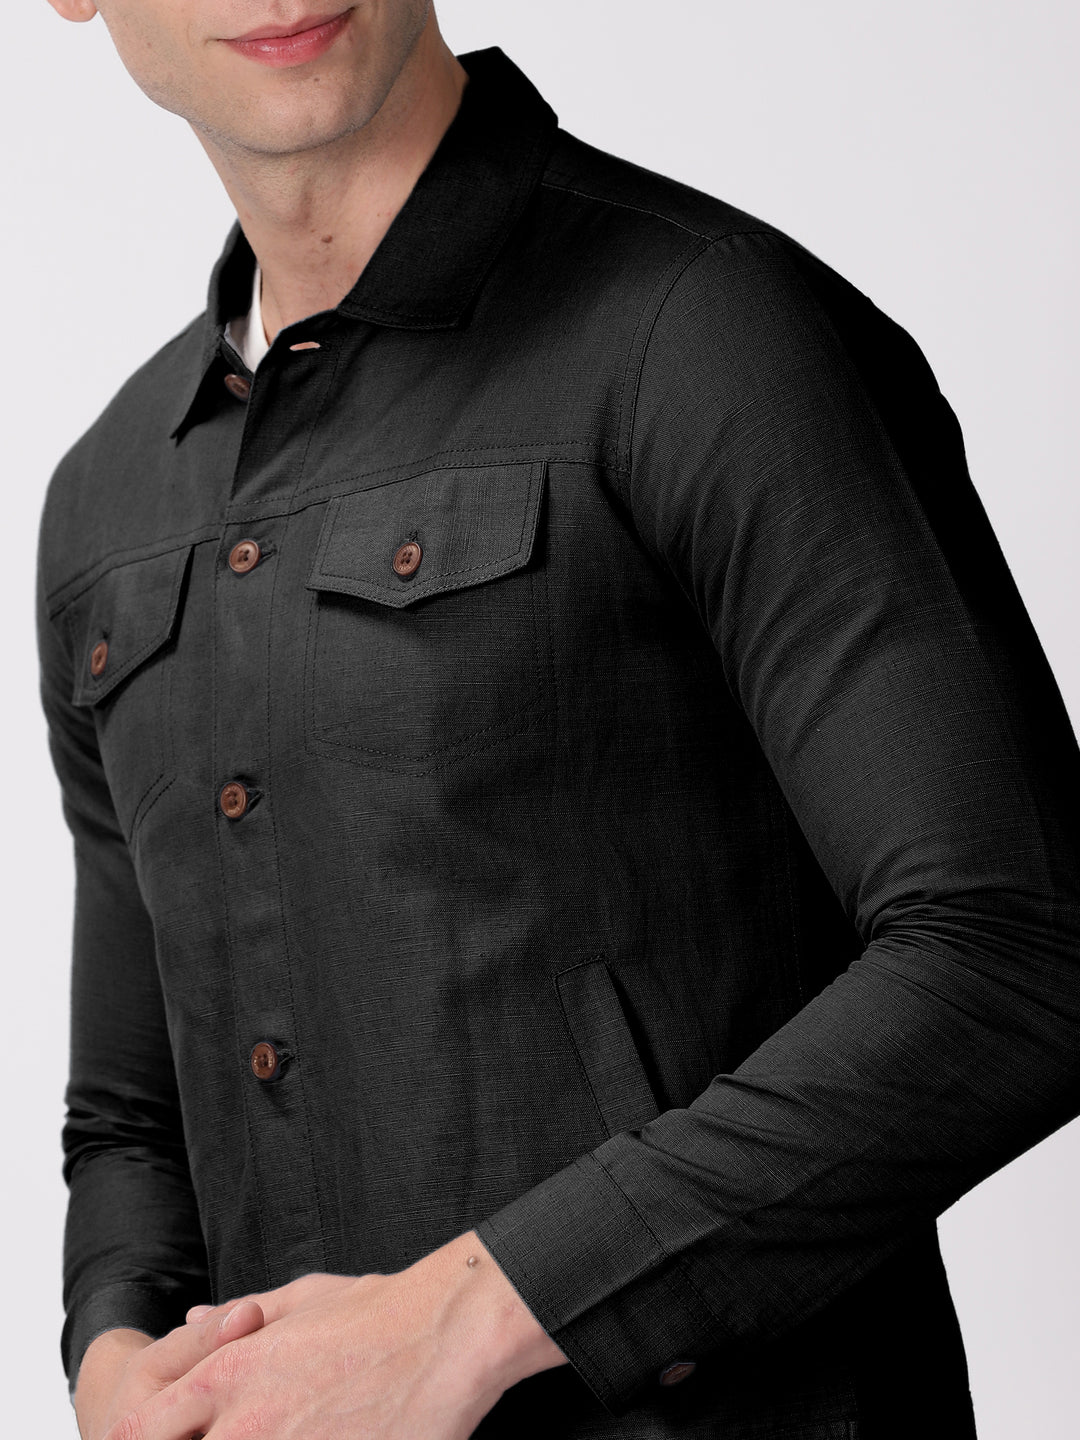 Black Linen Jacket & Jogger Co-Ord Set